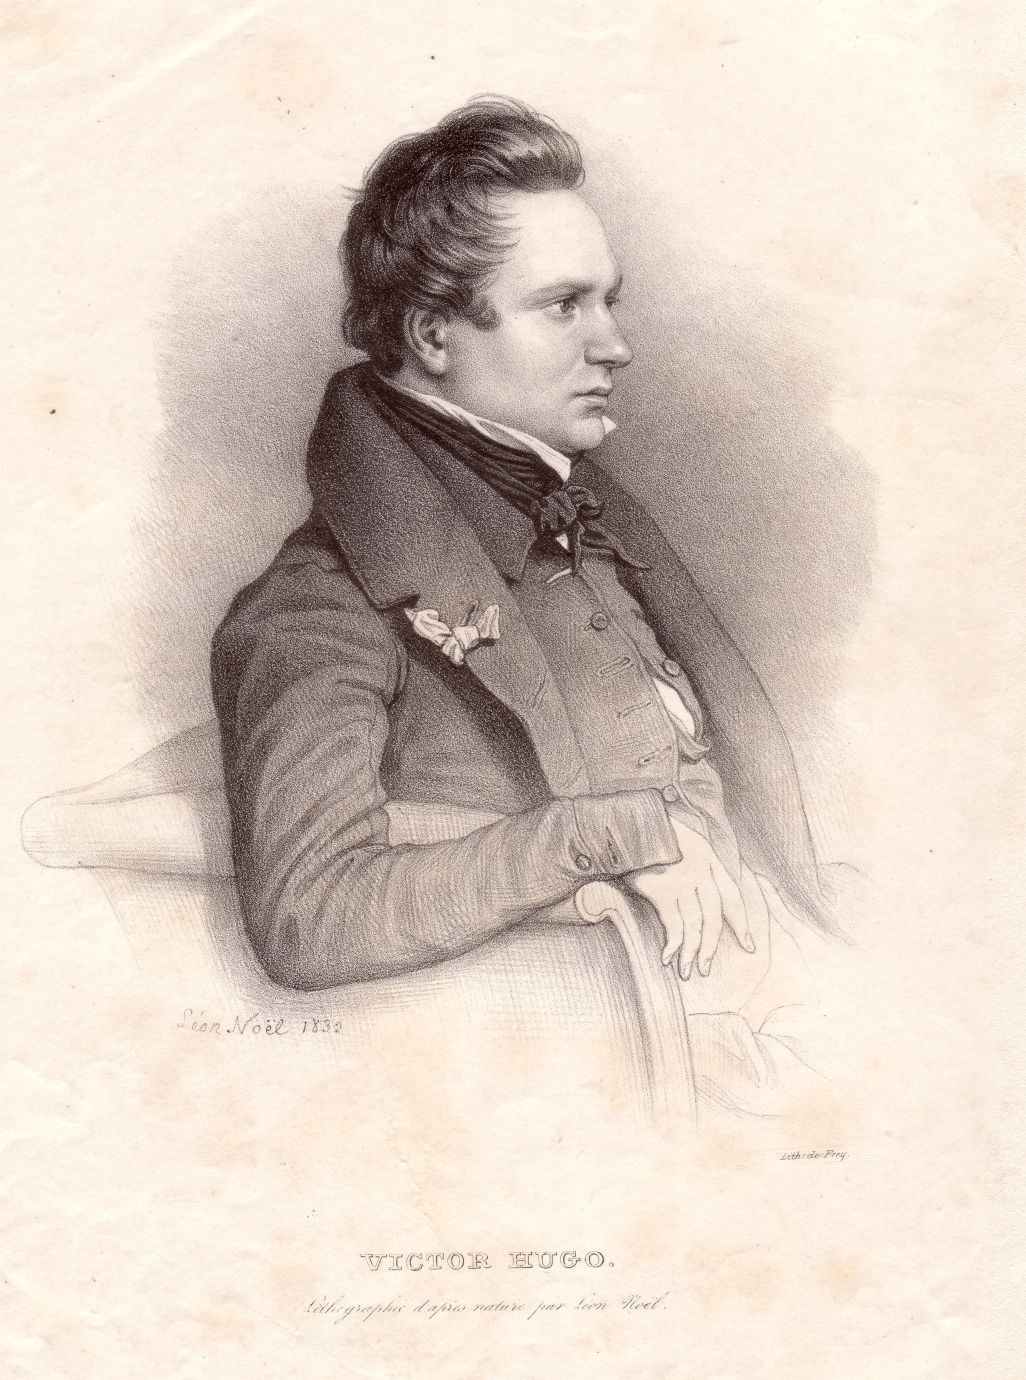 Victor-Marie Hugo